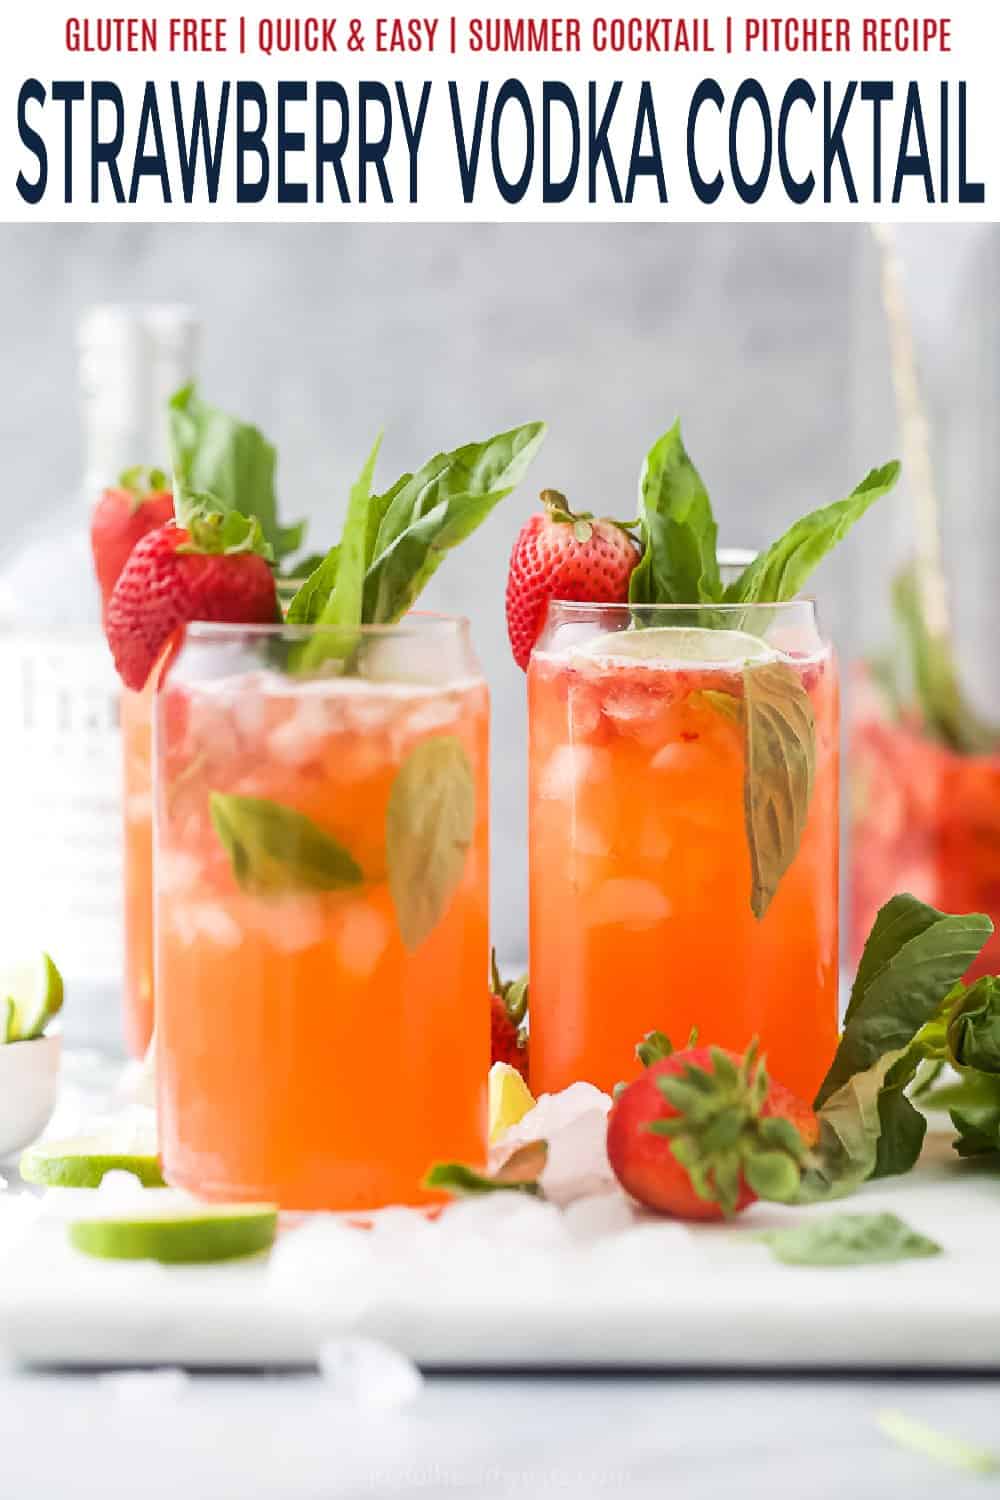 pinterst image for strawberry vodka cocktail